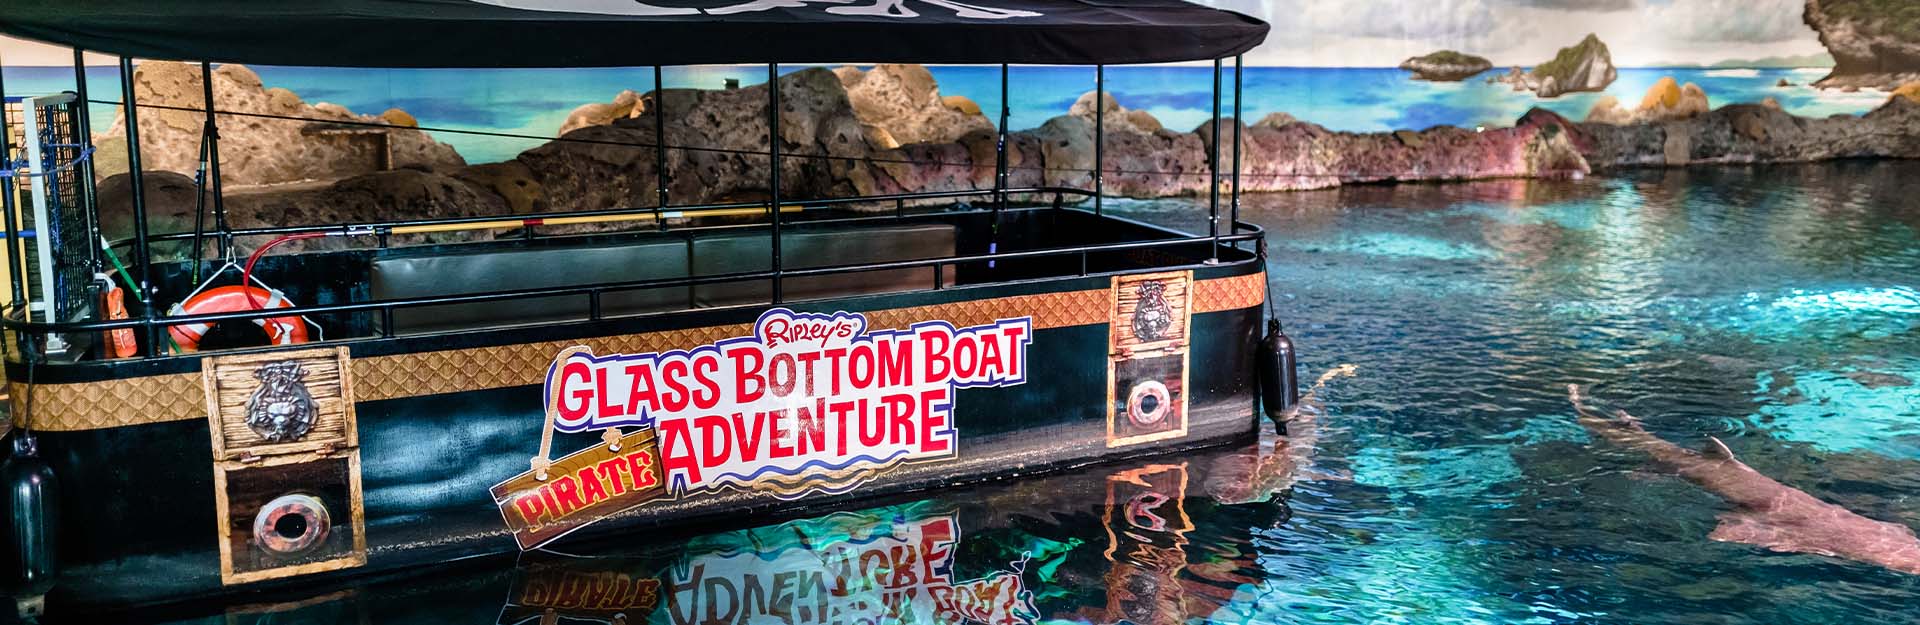 Ripley's Aquarium of the Smokies - Glass Bottom Boat Adventure